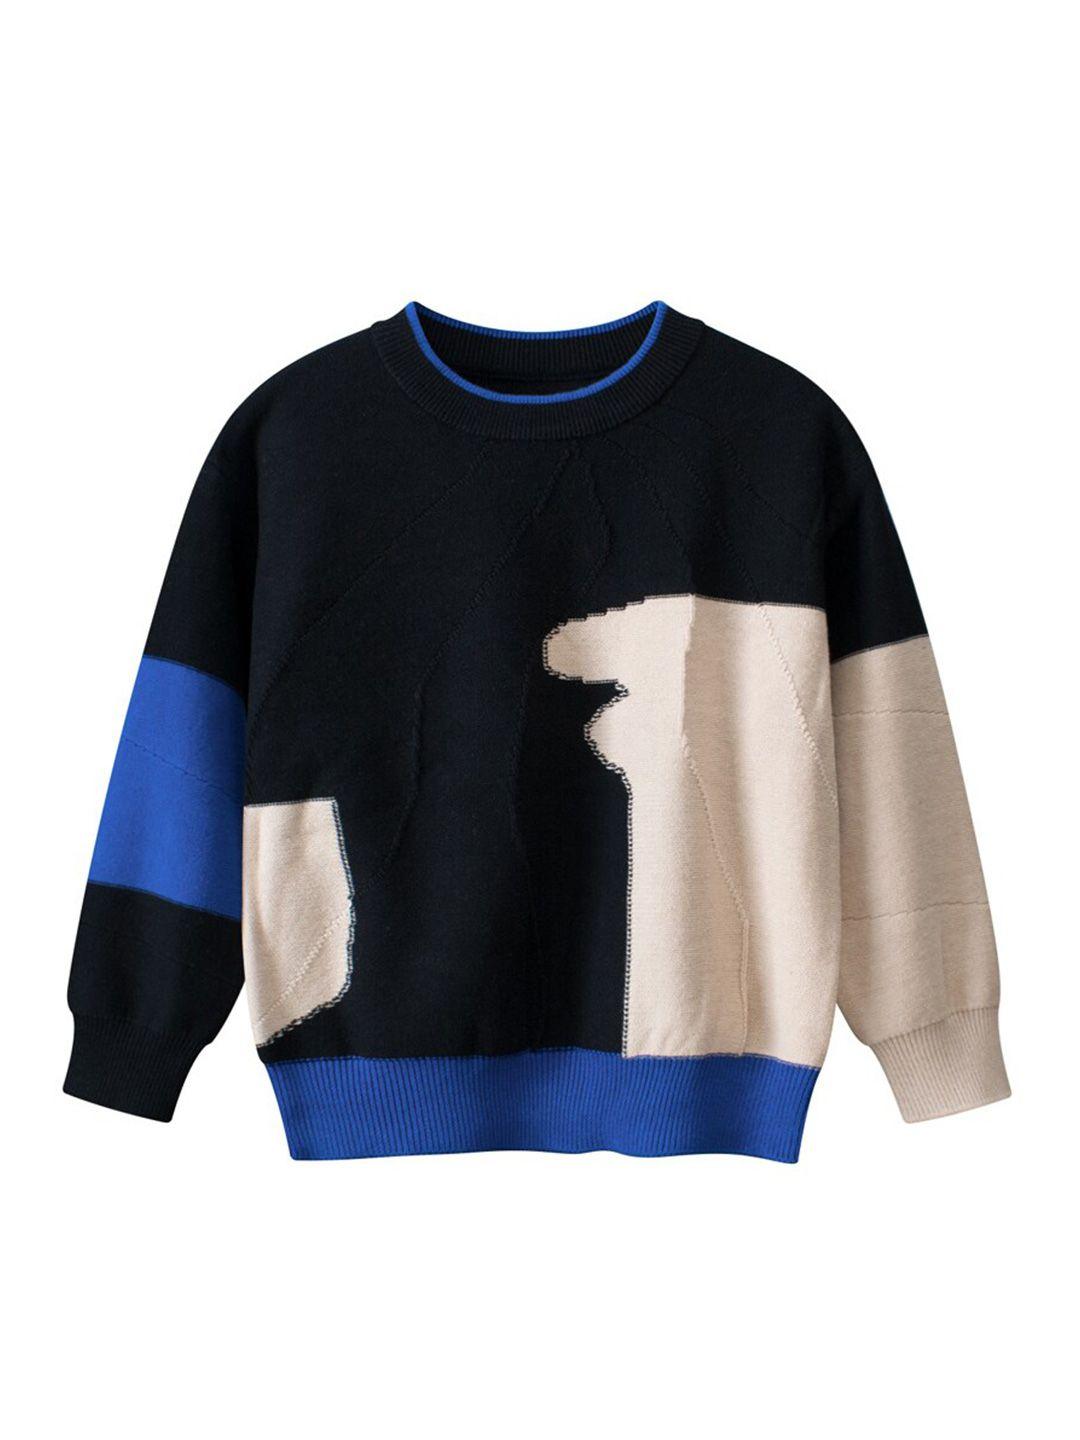 stylecast-boys-black-&-blue-colourblocked-cotton-pullover-sweater